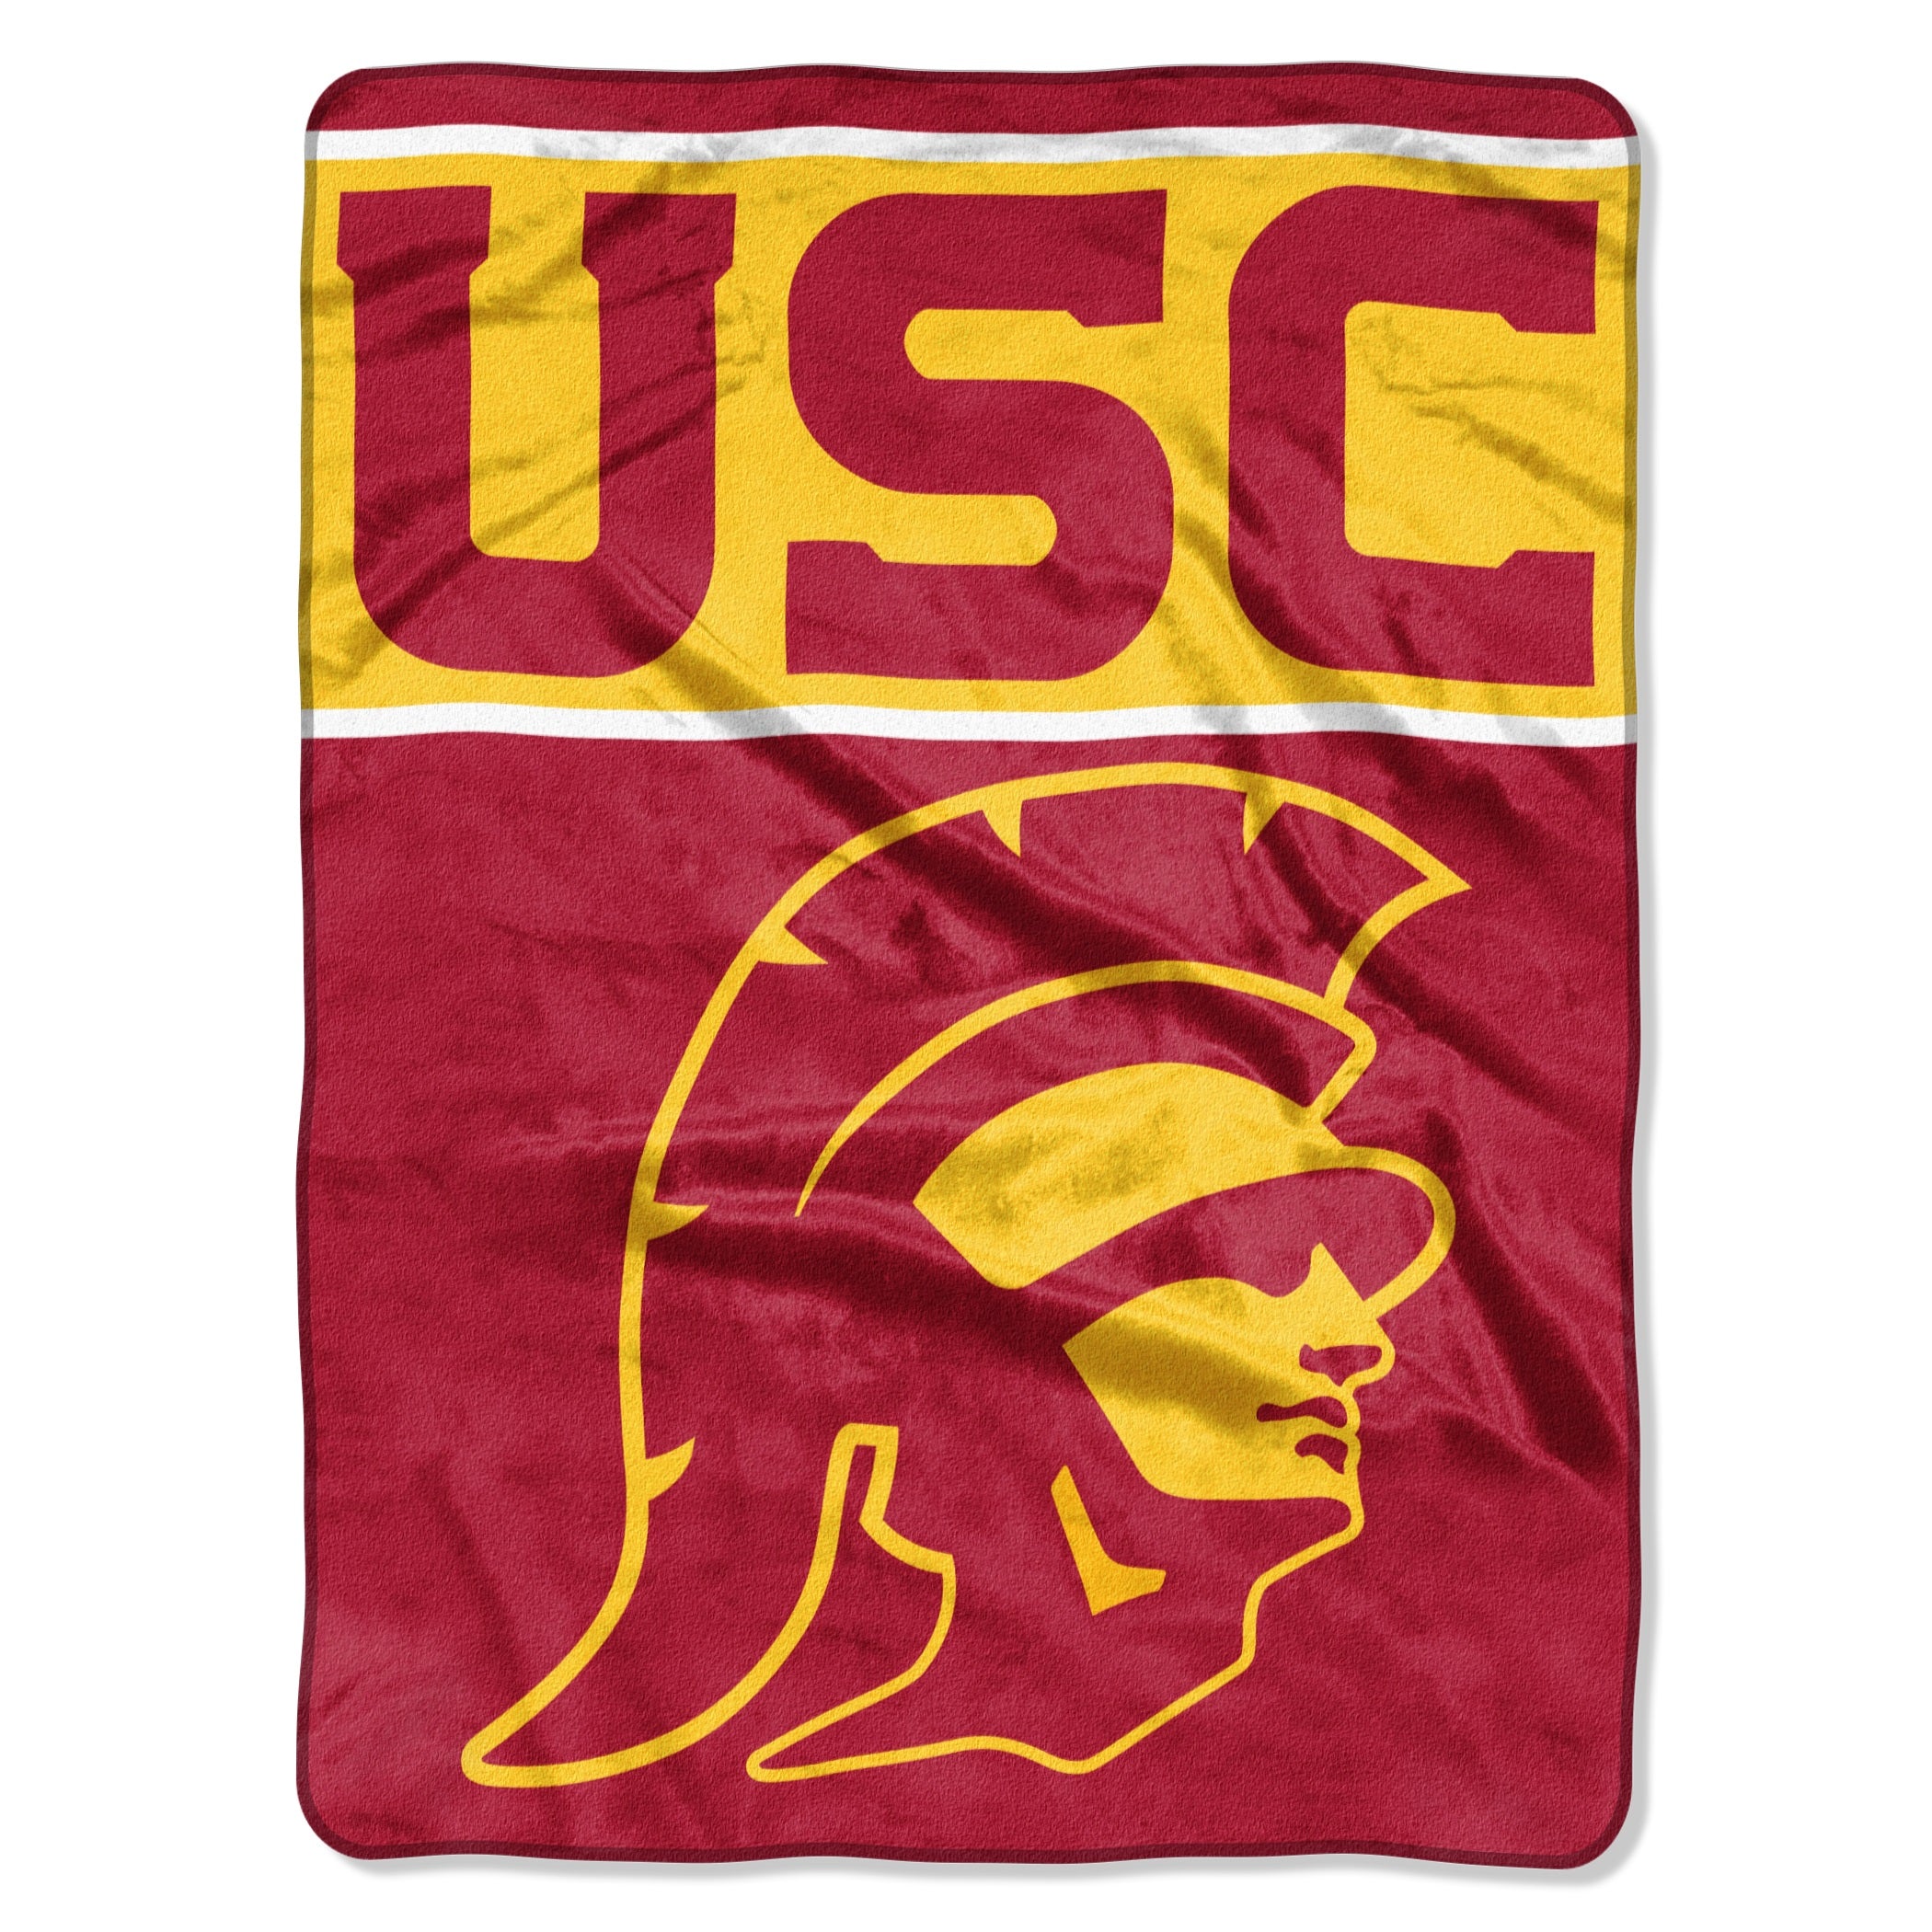 USC Trojans Blanket 60x80 Raschel Basic Design - Special Order